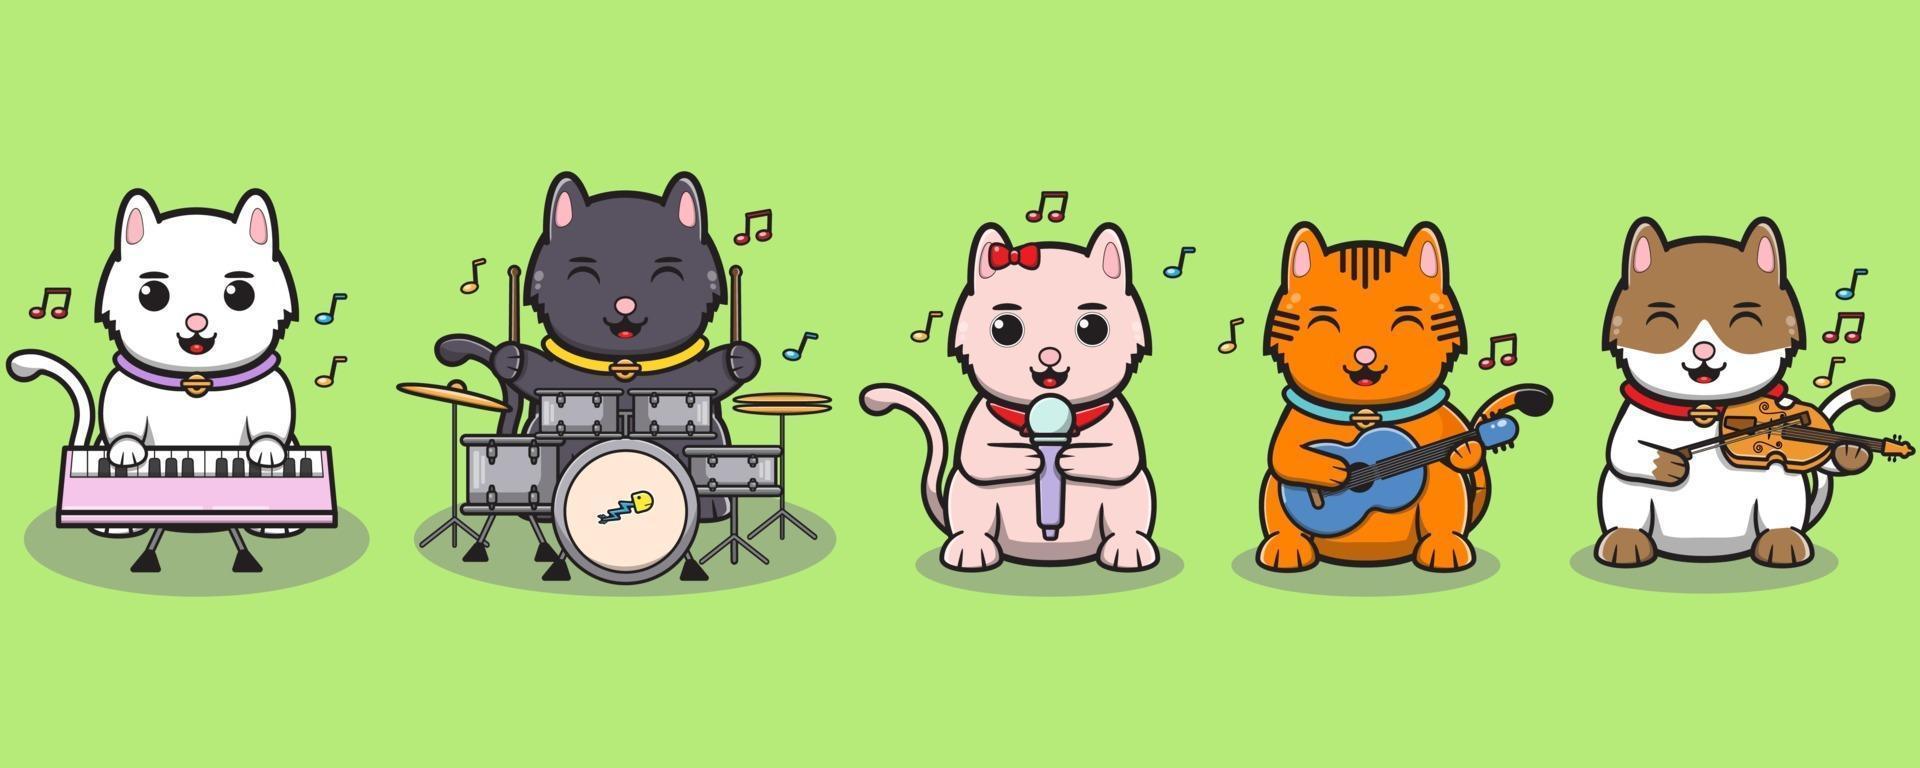 Lucky Cat-muziekband vector